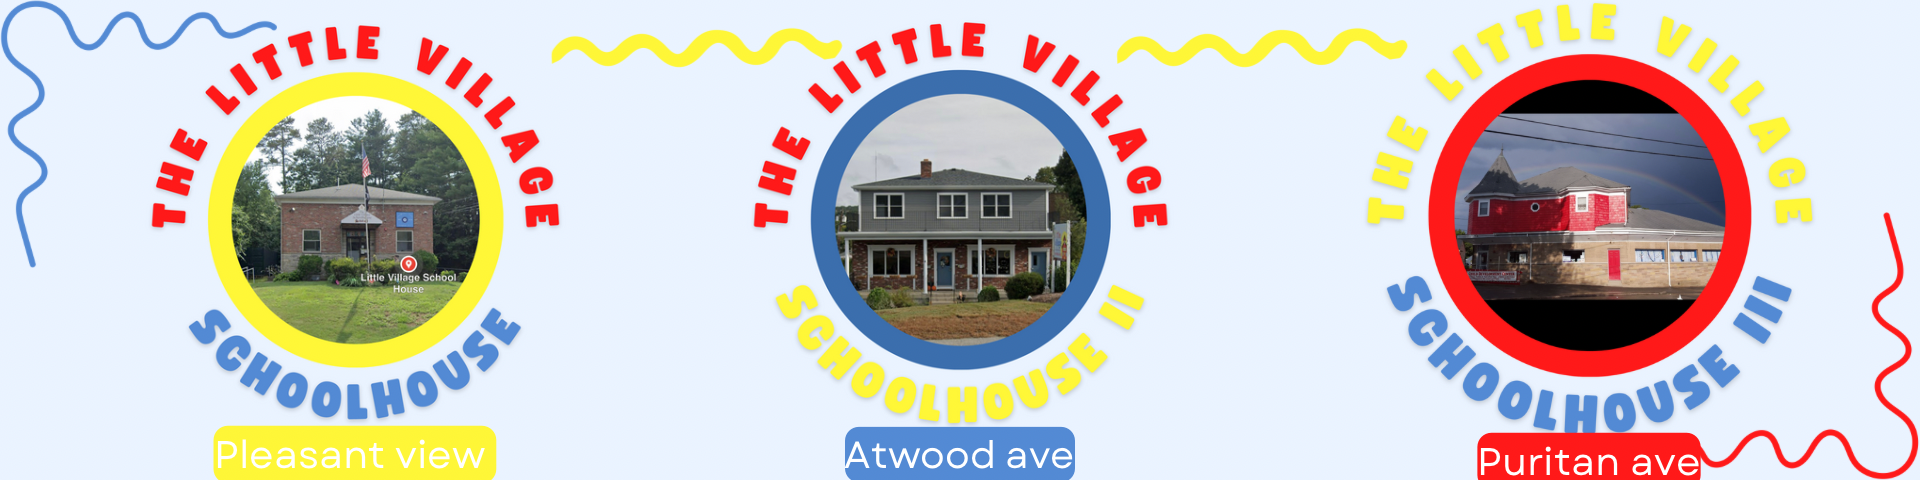 The Little Village Schoolhouse Daycare